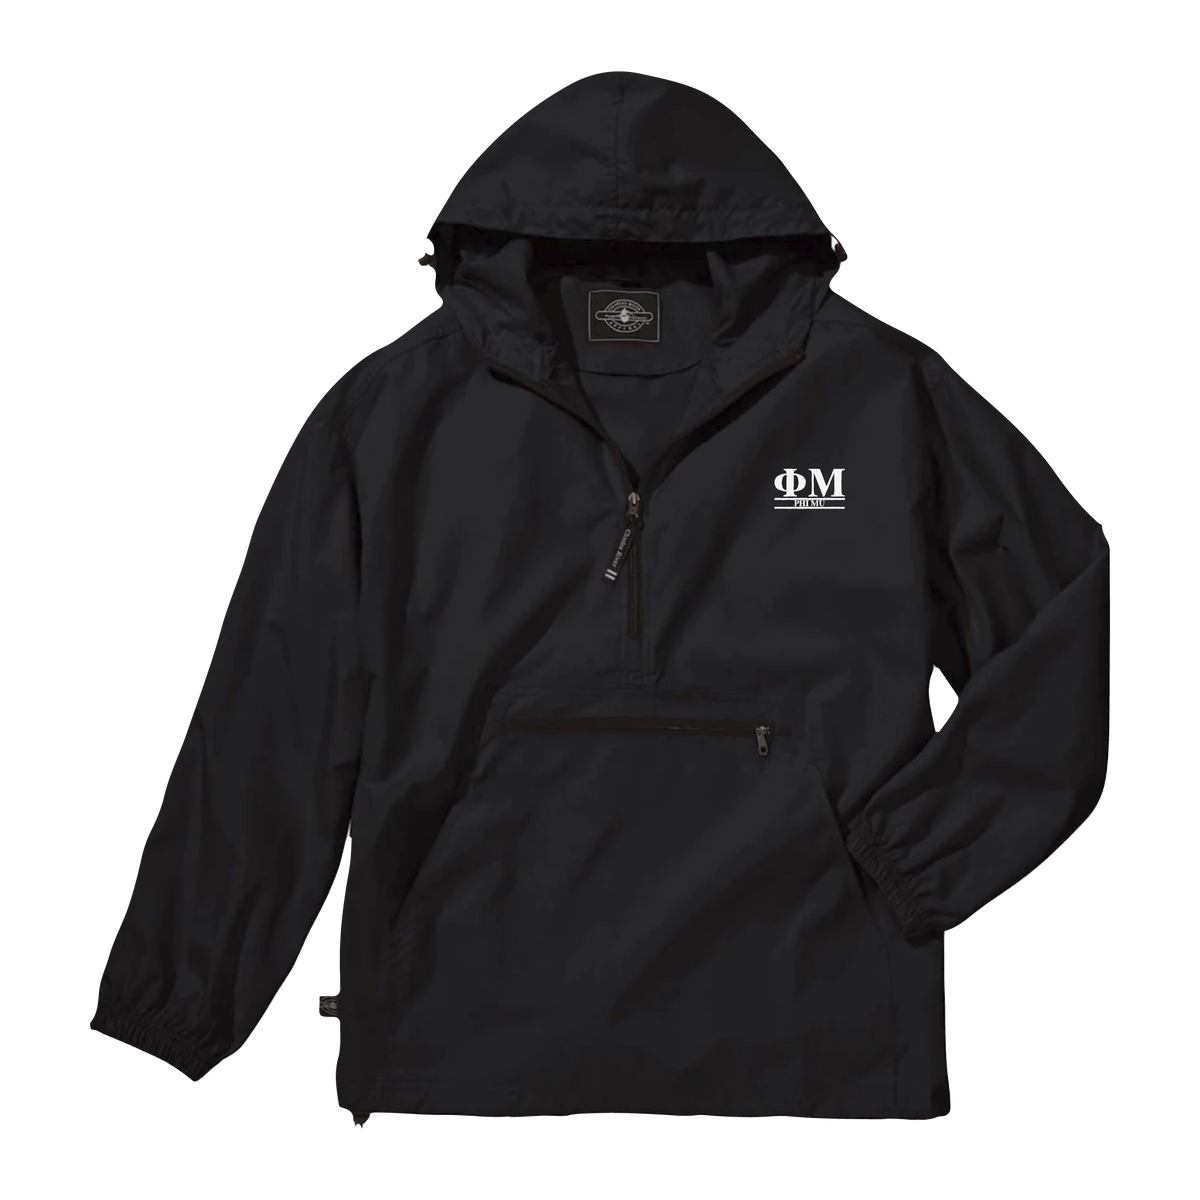 B-Unlimited Greek - Rain Jacket (PHI MU) - Charles River - 9905 - Solid Rain Jacket Pullover - Black